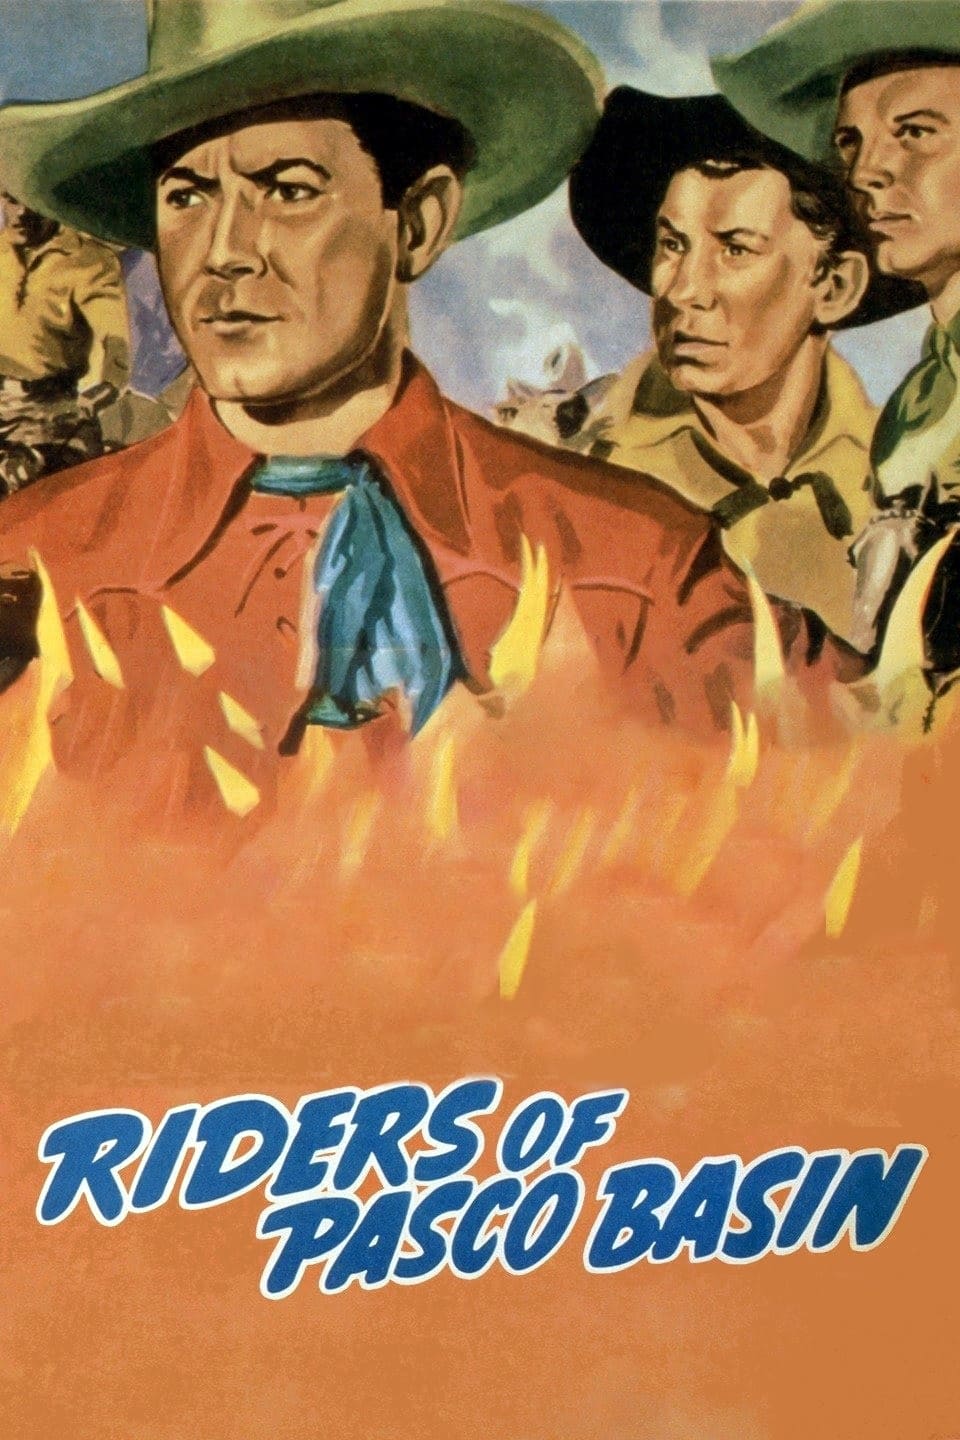 Riders of Pasco Basin (1940)